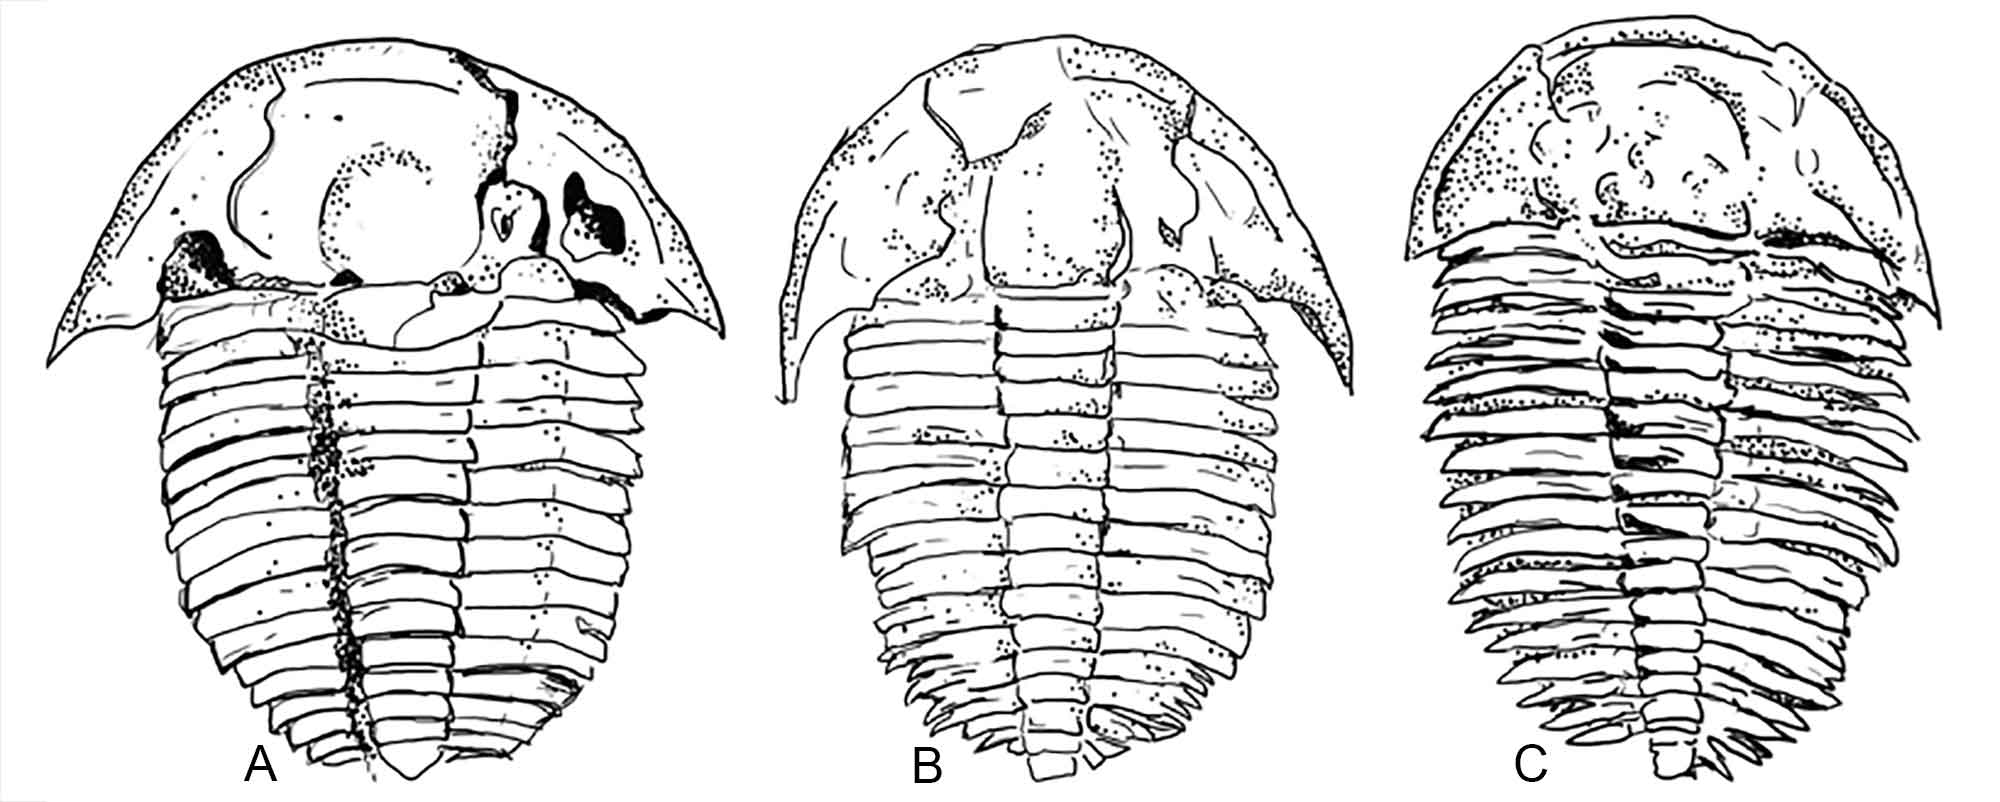 Drawings of three trilobites. Left to right: Elrathia antiquata, Aphelaspis brachyphasis, and Modocia sp.